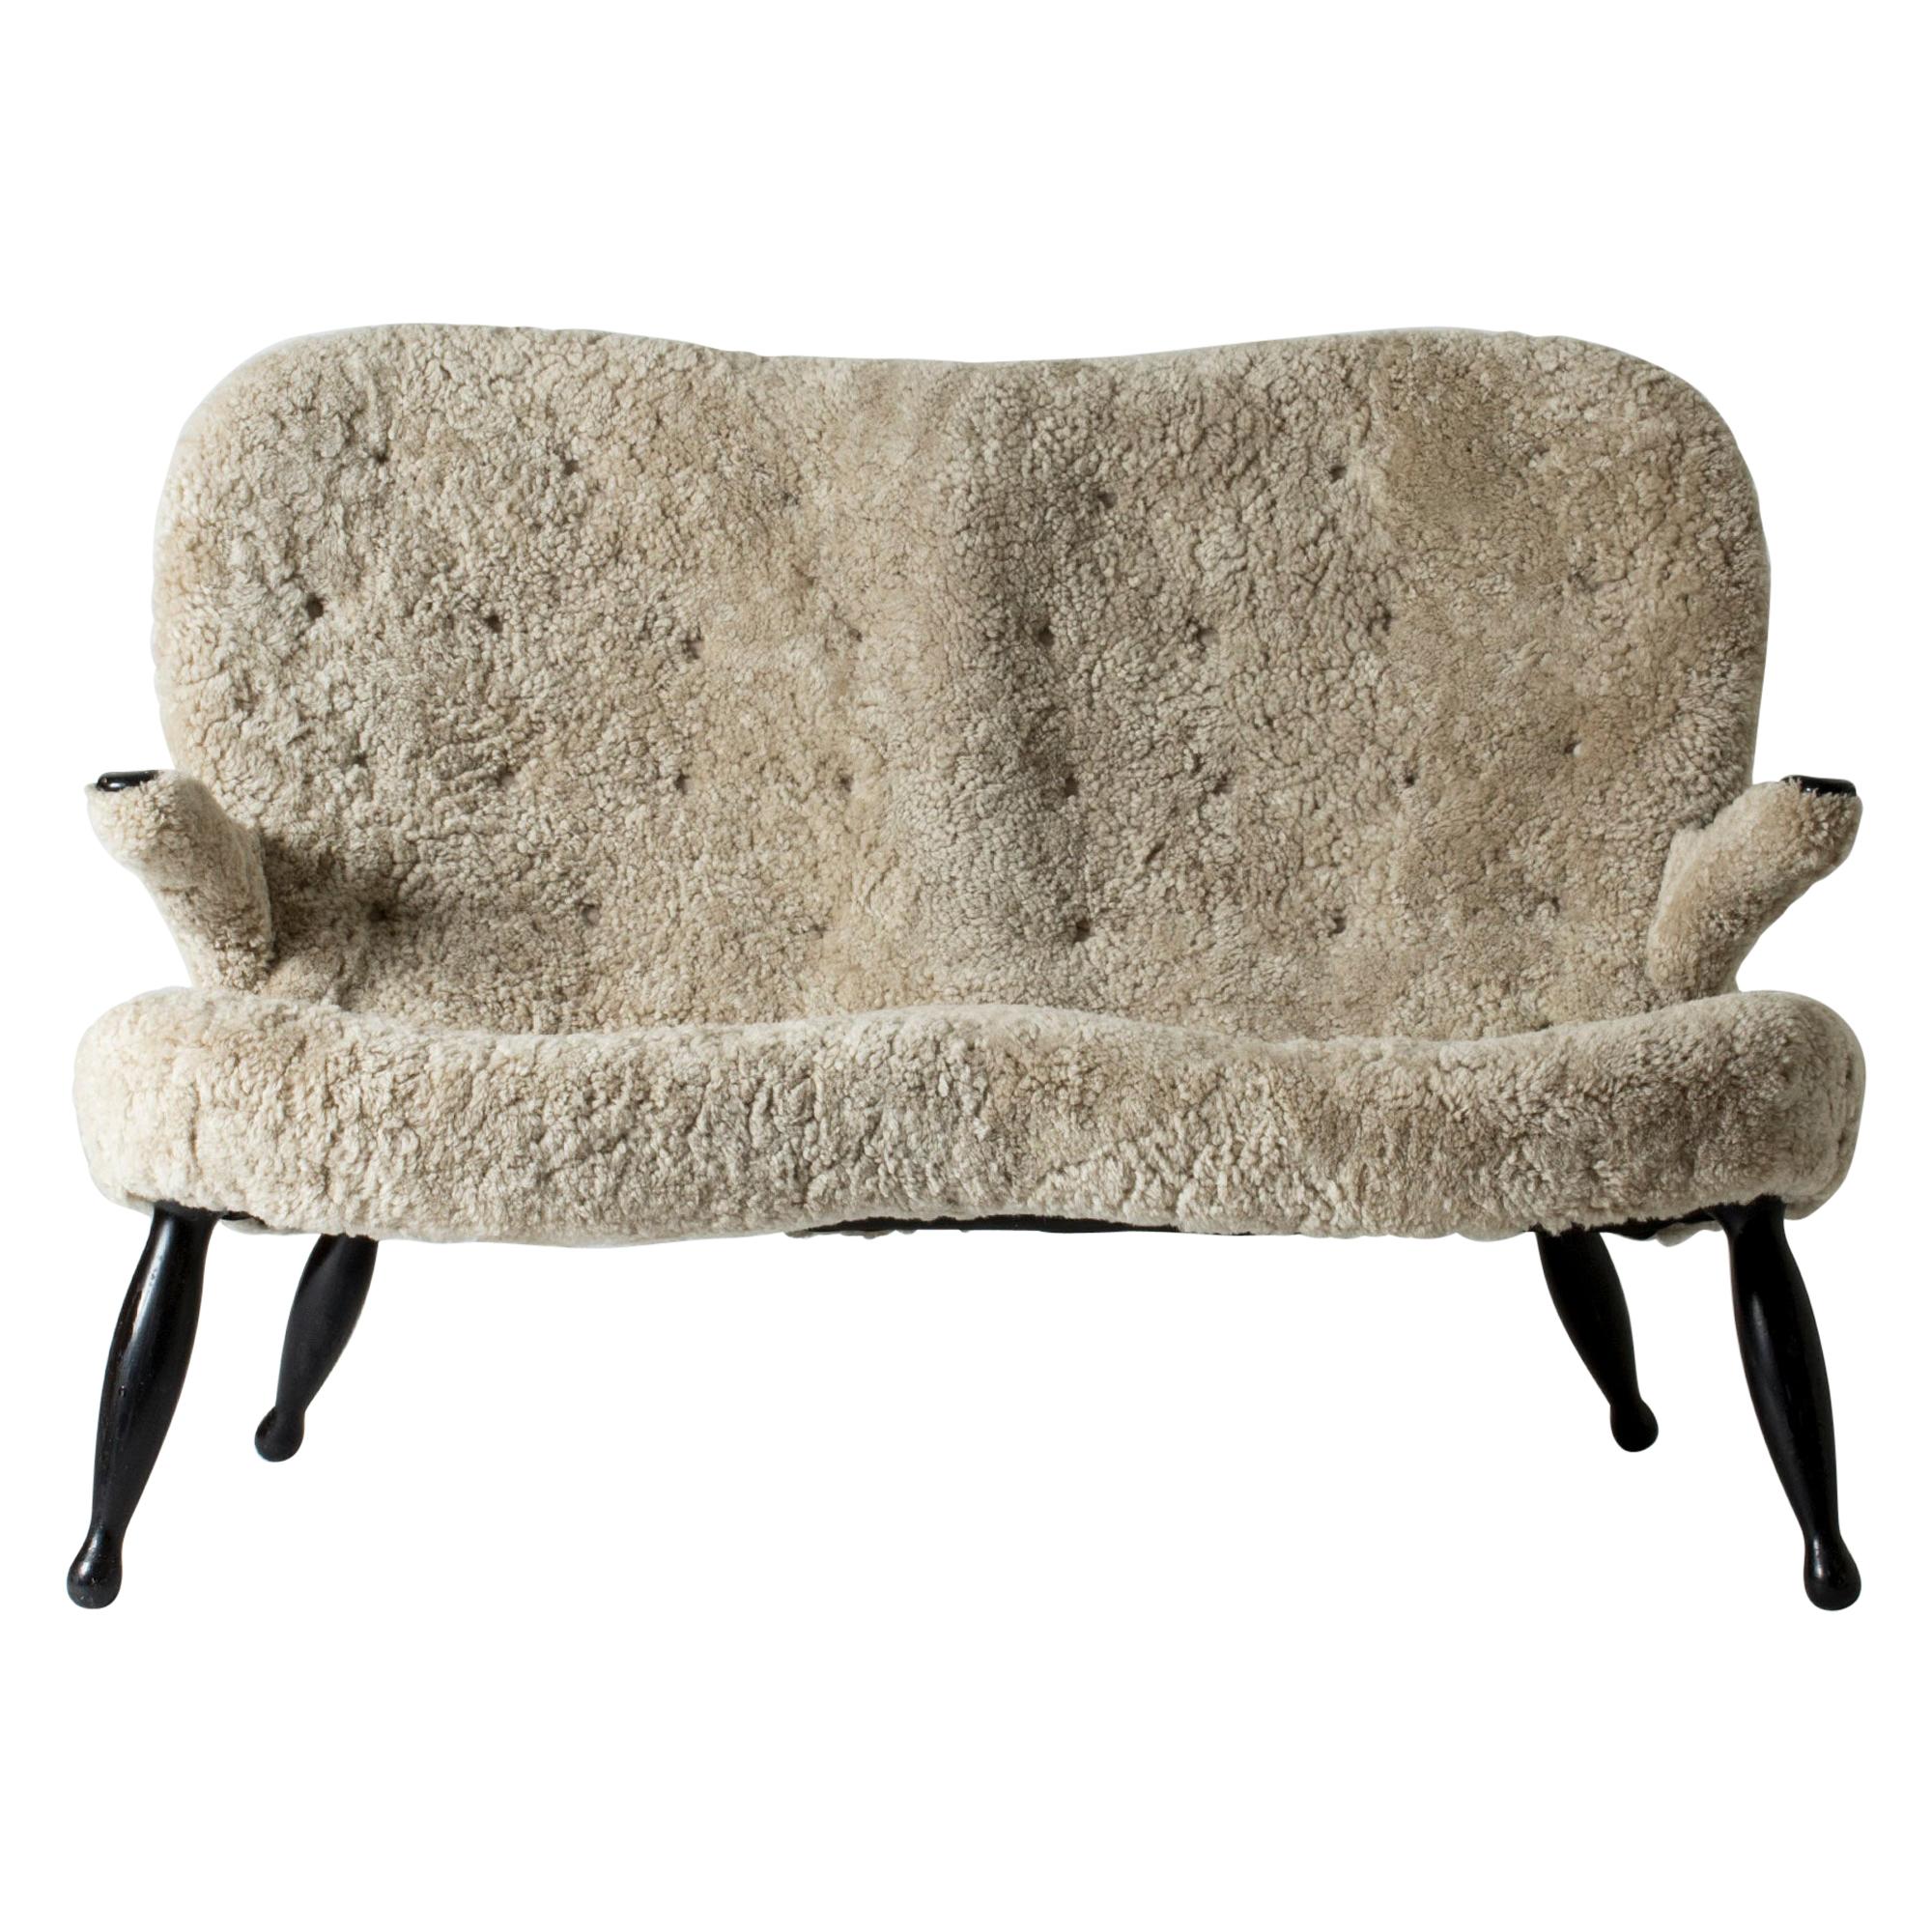 Sheepskin "Clam" Sofa by Philip Arctander, Denmark, 1950s